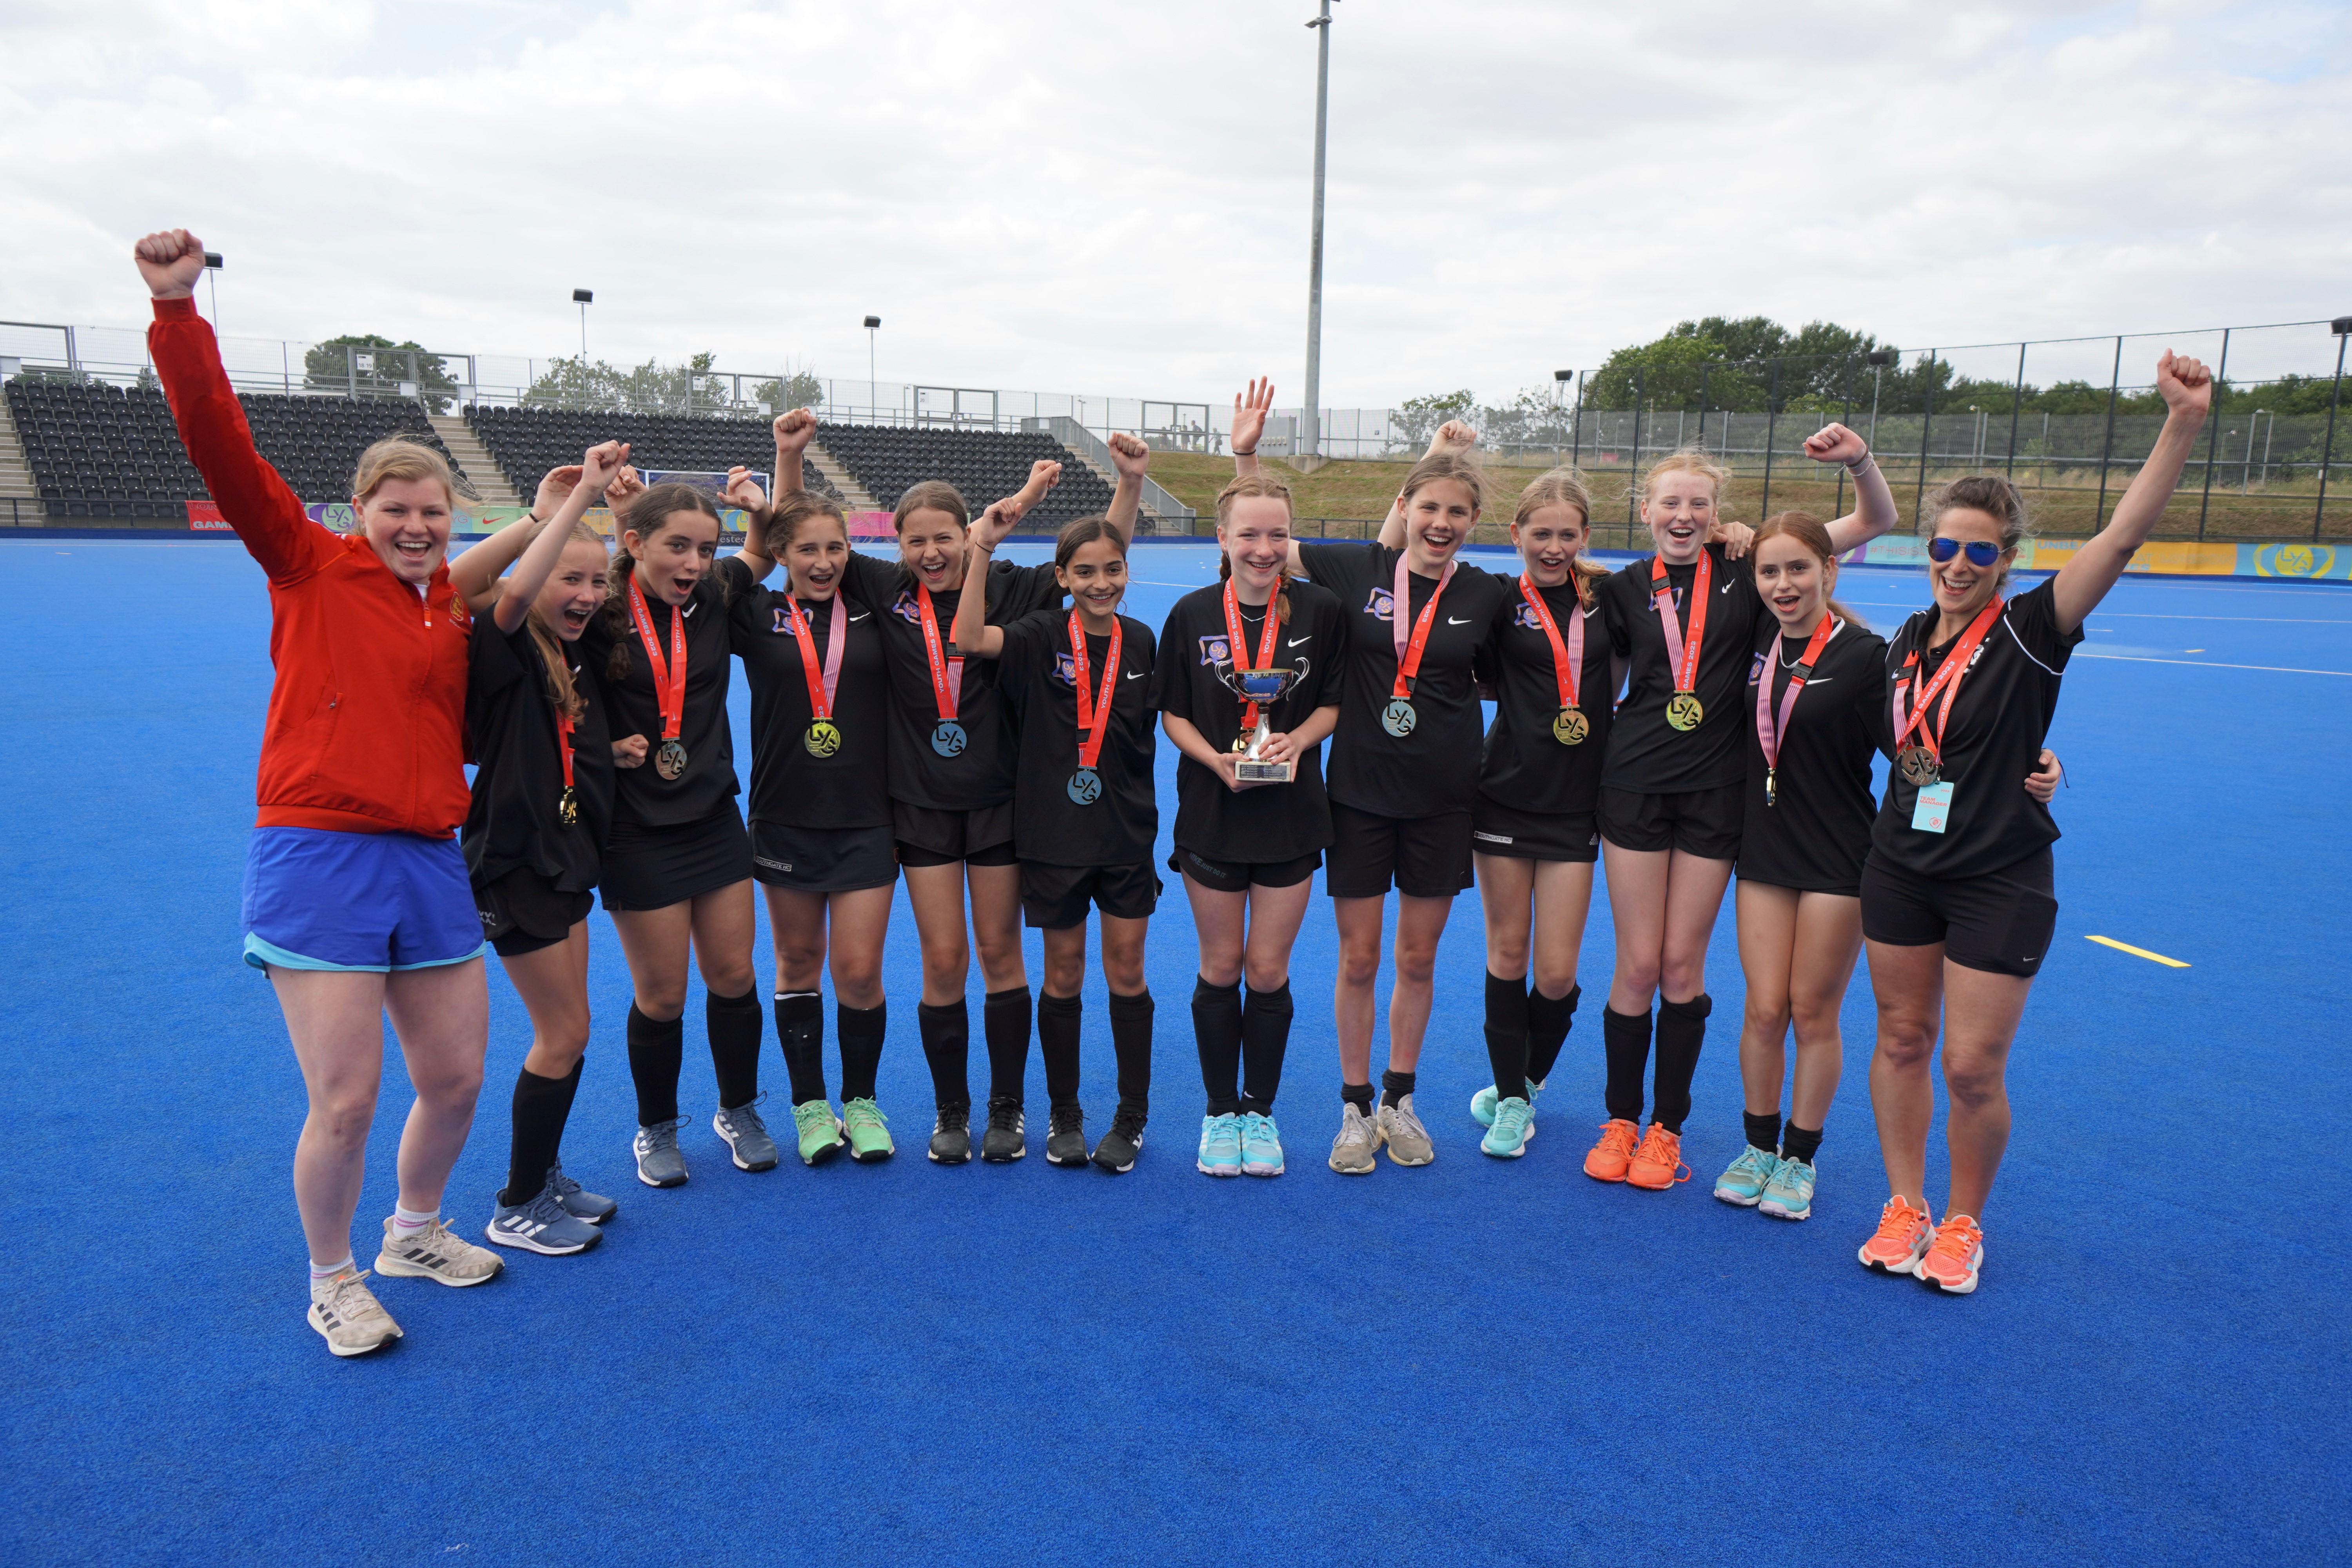 Haringey's victorious girls' hockey team